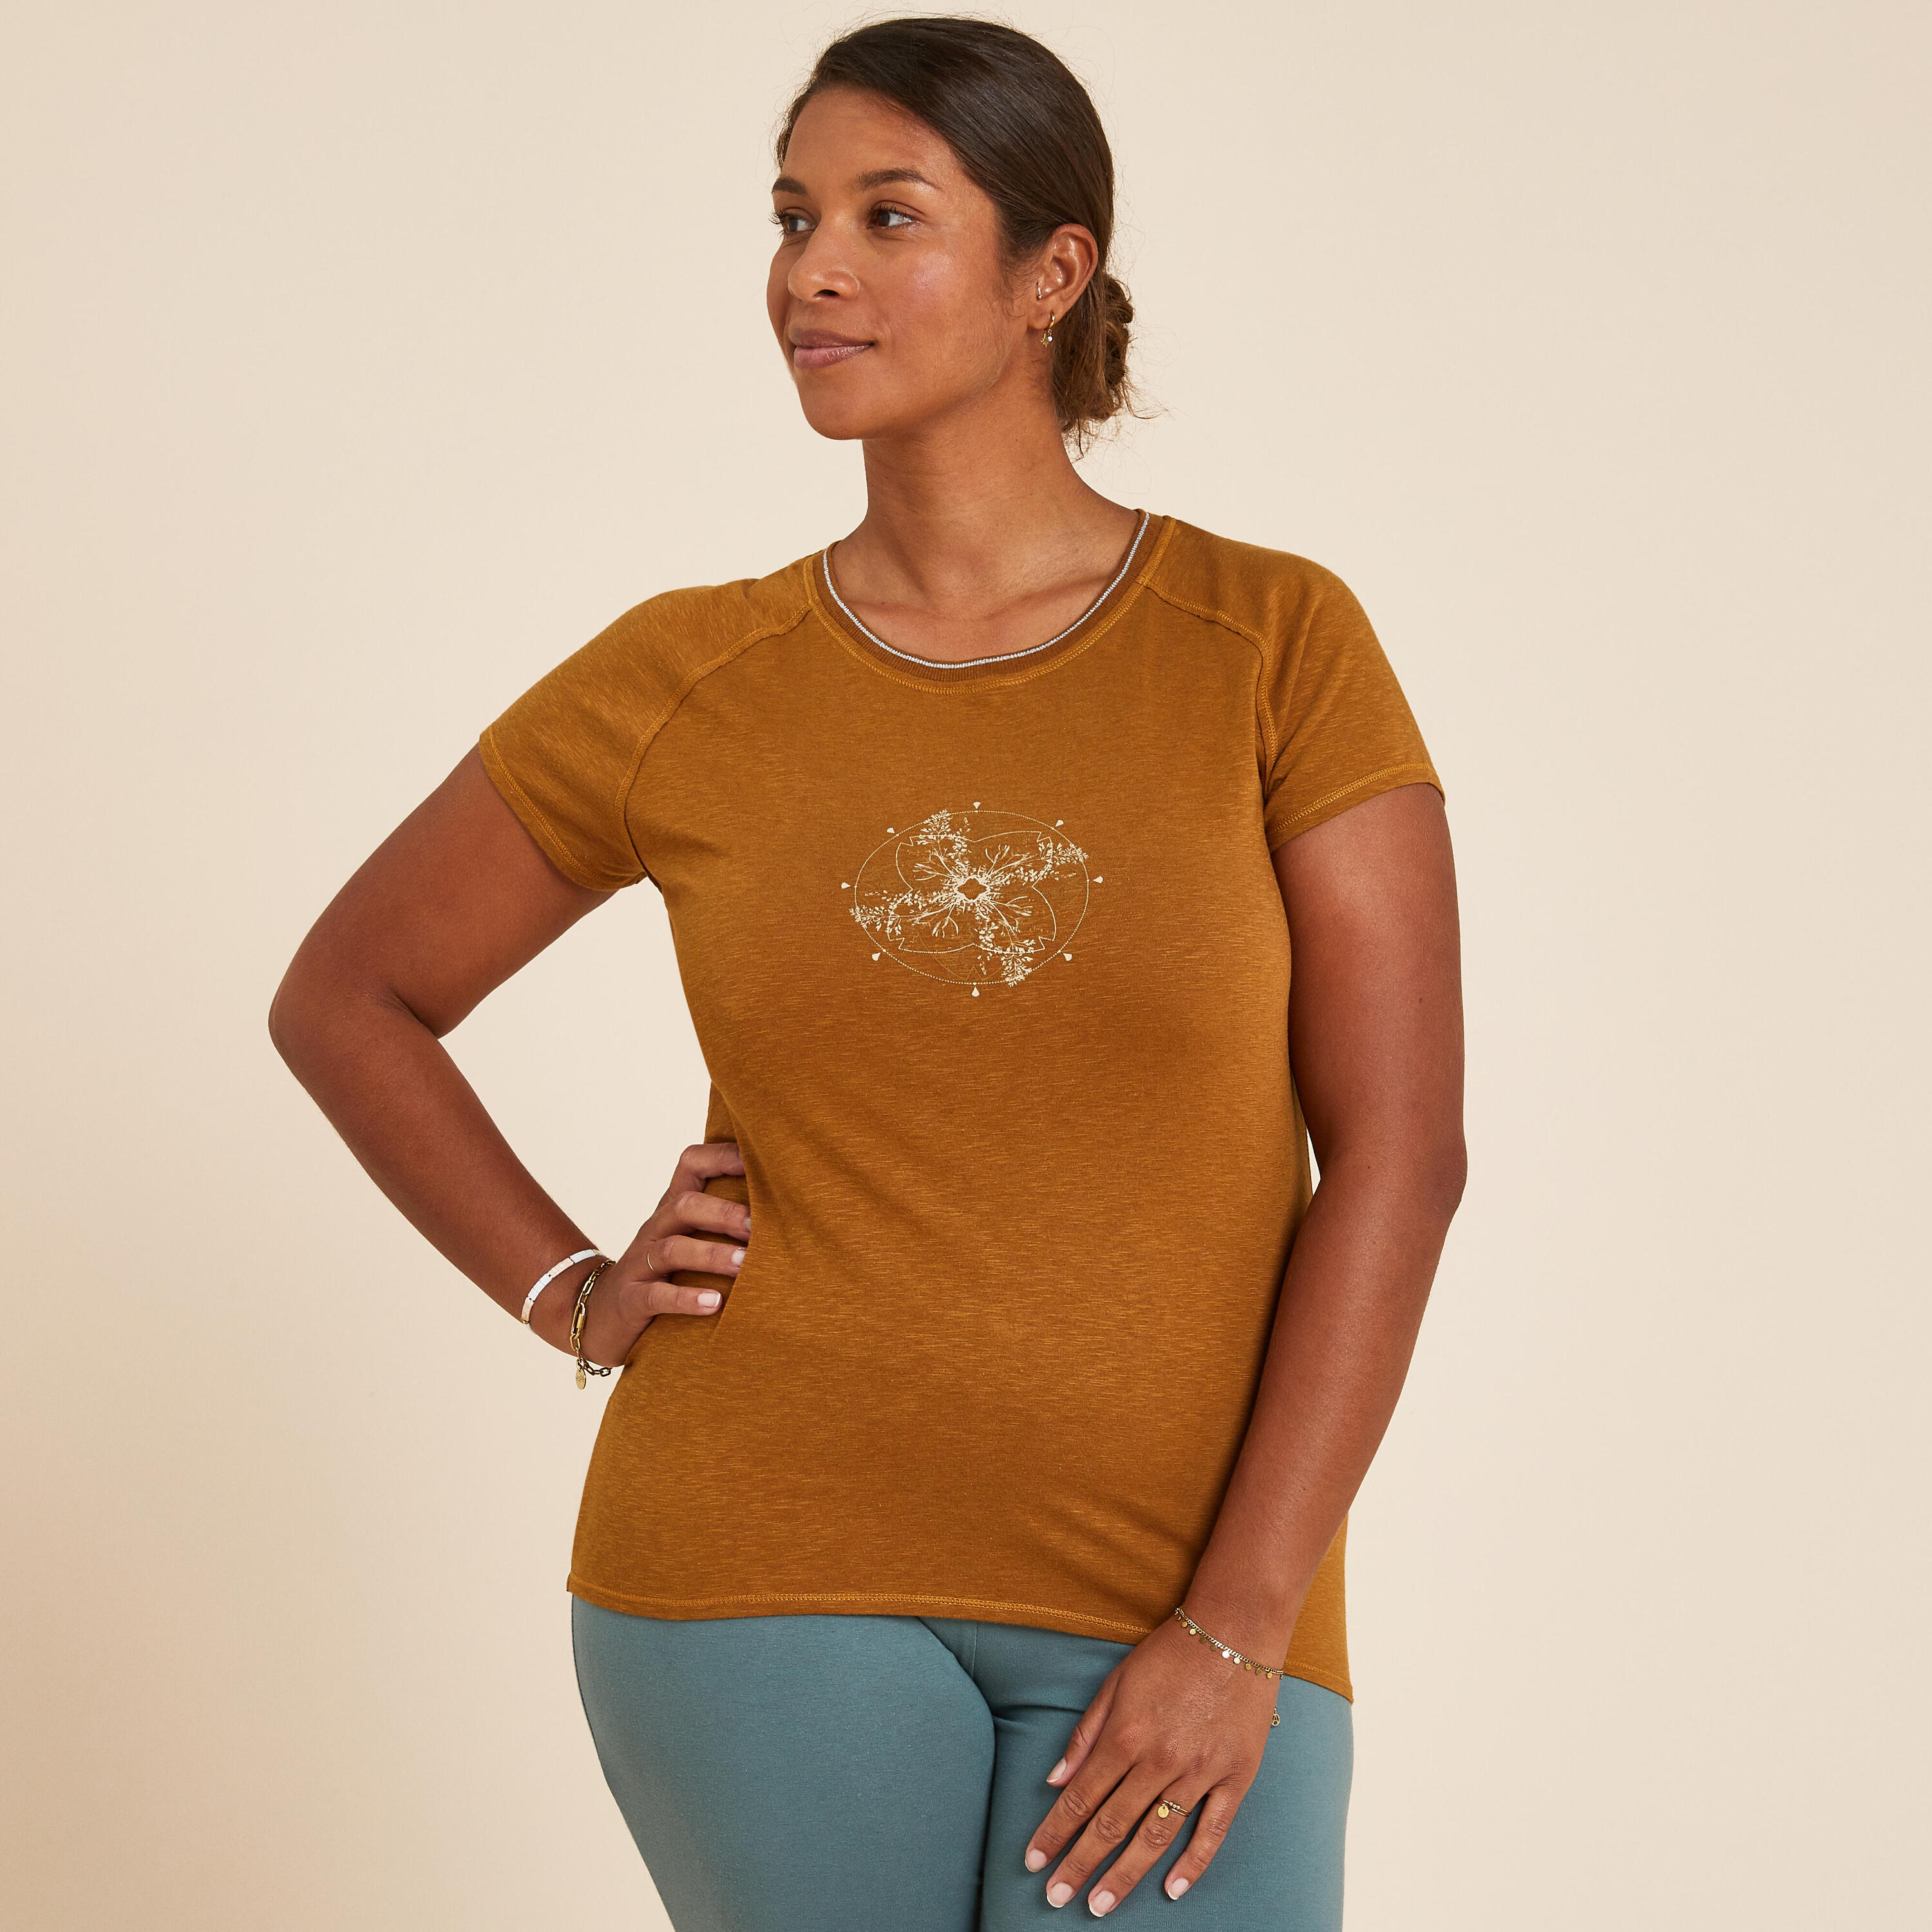 KIMJALY Women's Gentle Yoga T-Shirt - Brown Mandala